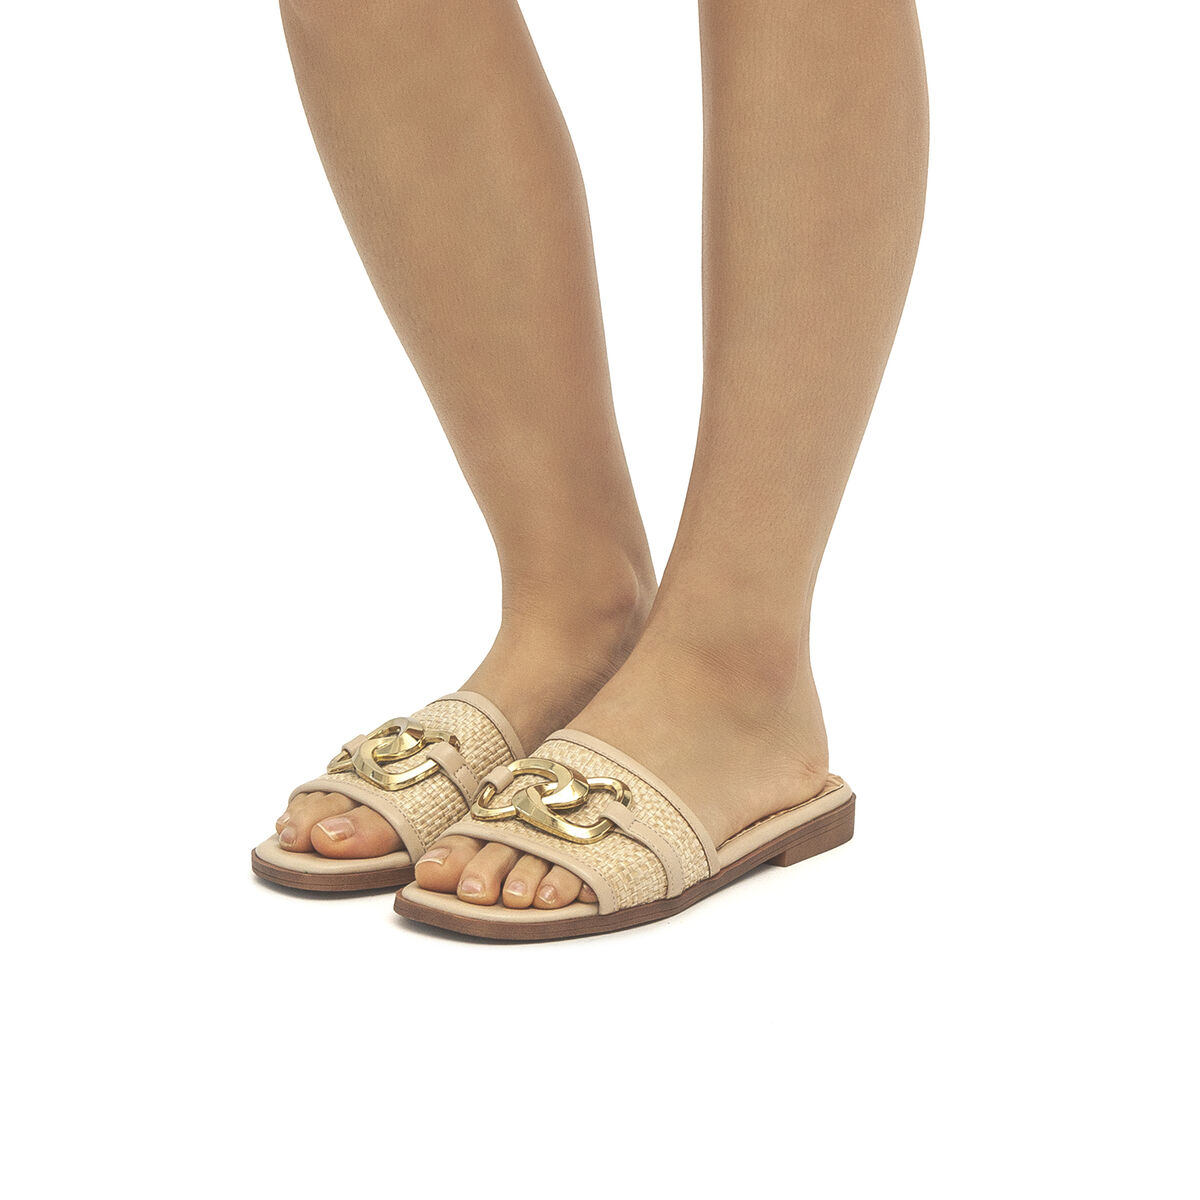 Sandalias planas de Mujer modelo JULIE de MTNG image number 1